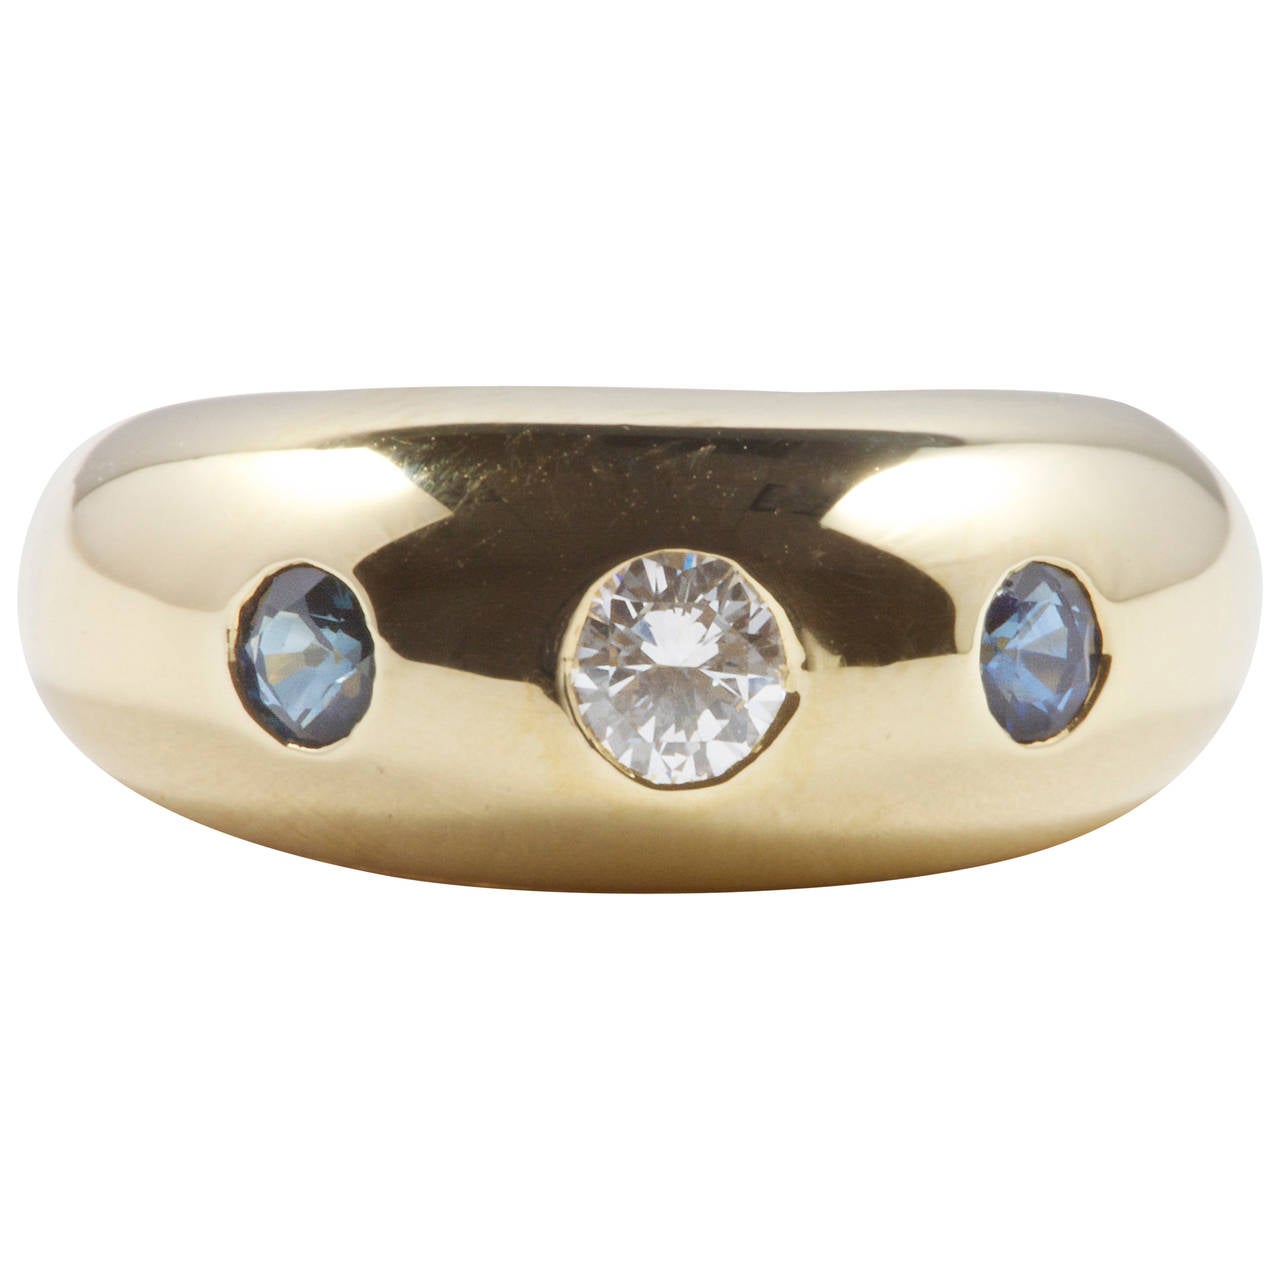 Cartier Diamond Sapphire Gold Ring at 1stdibs